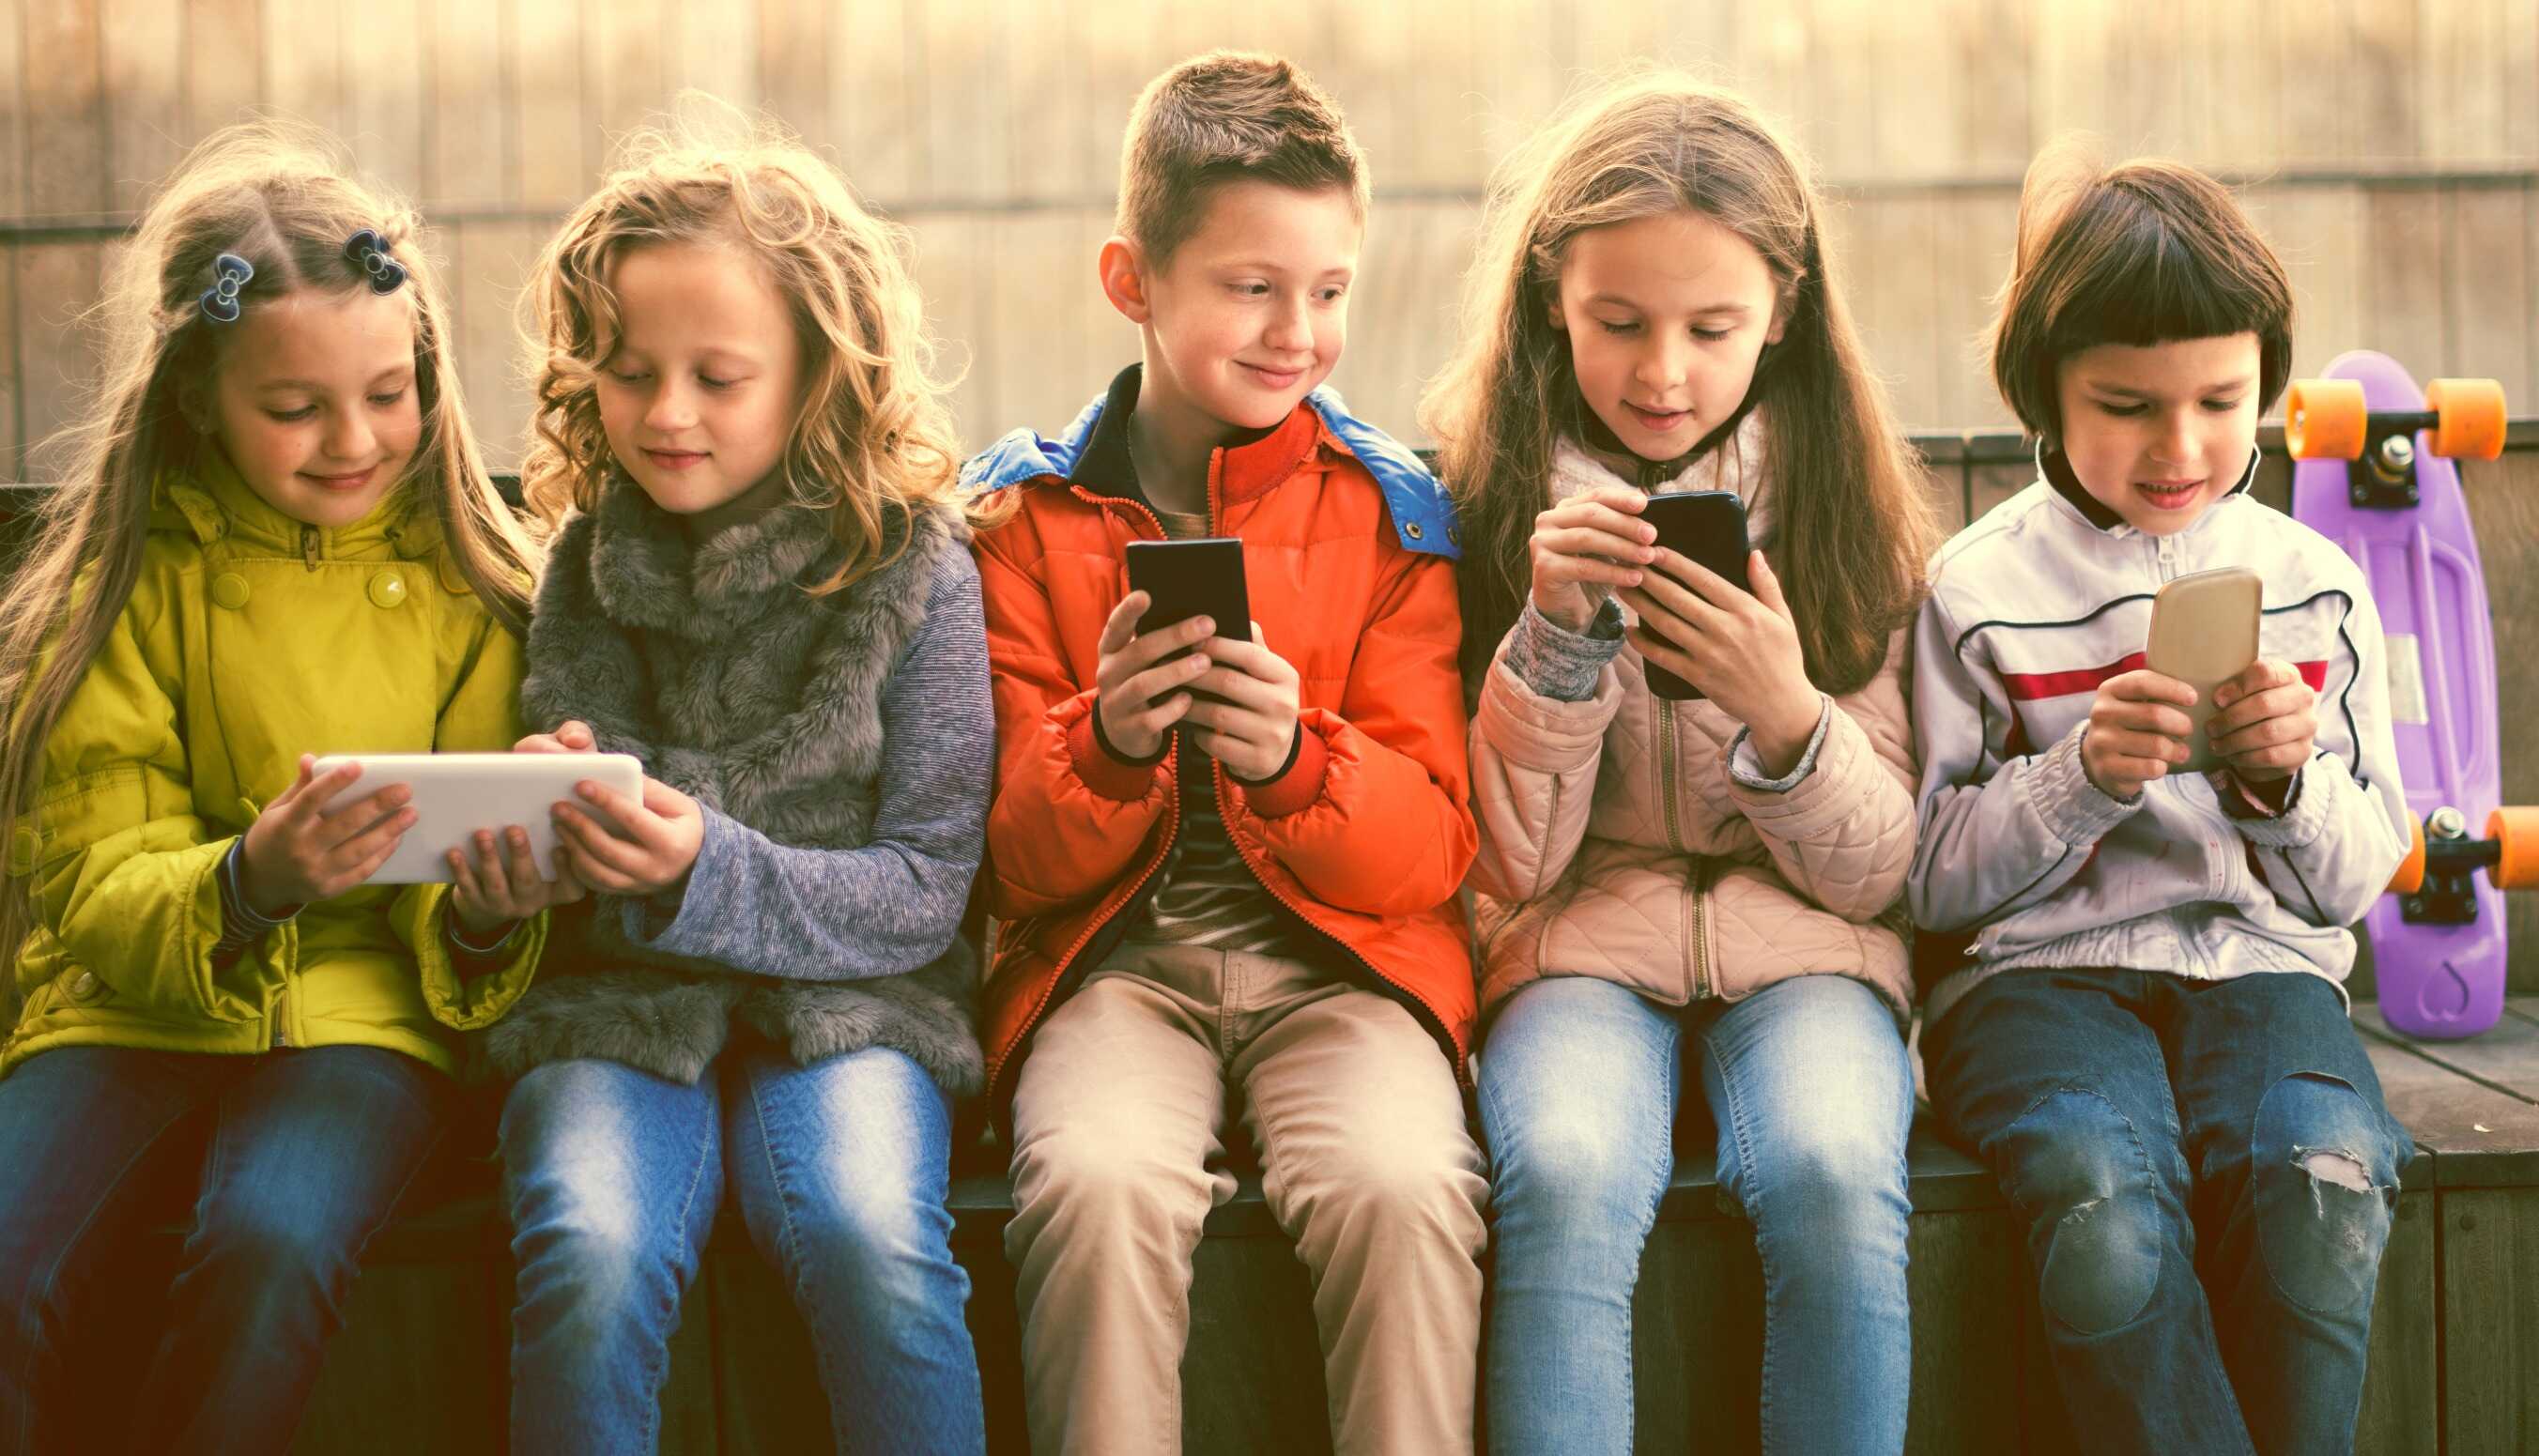 parents-unite-in-smartphone-ban-for-children